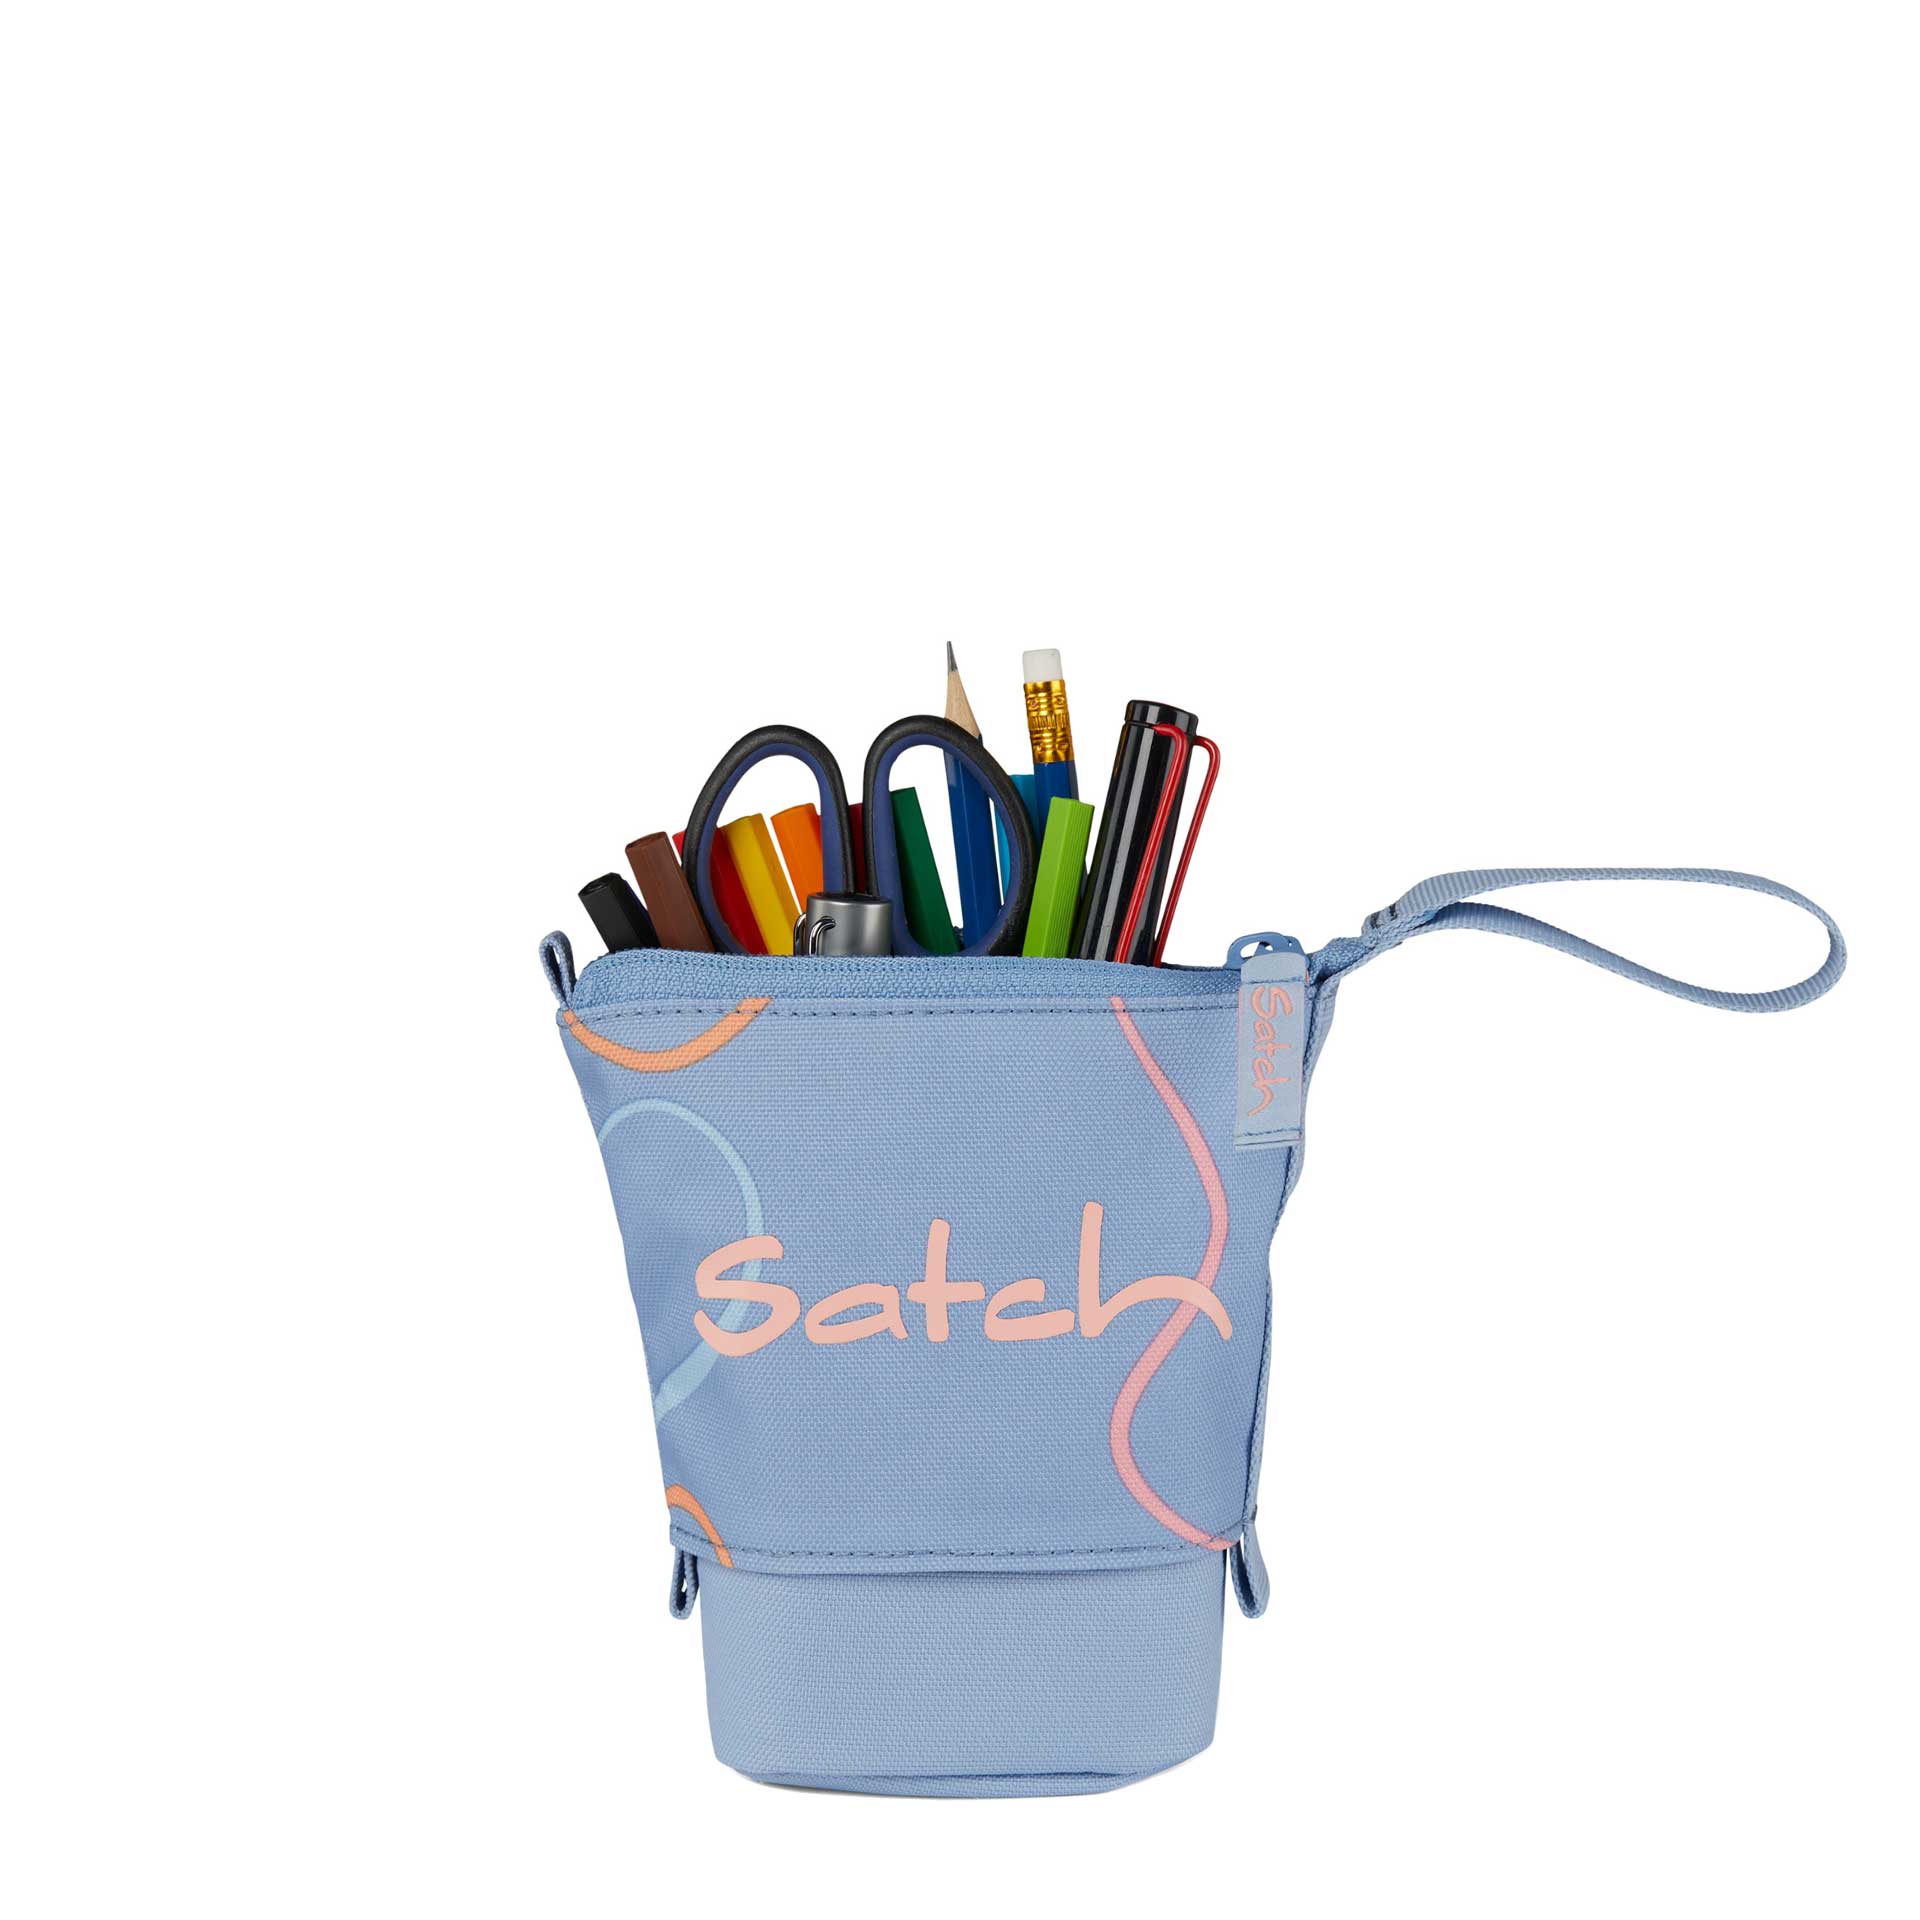 Satch Pencil Slider vivid blue